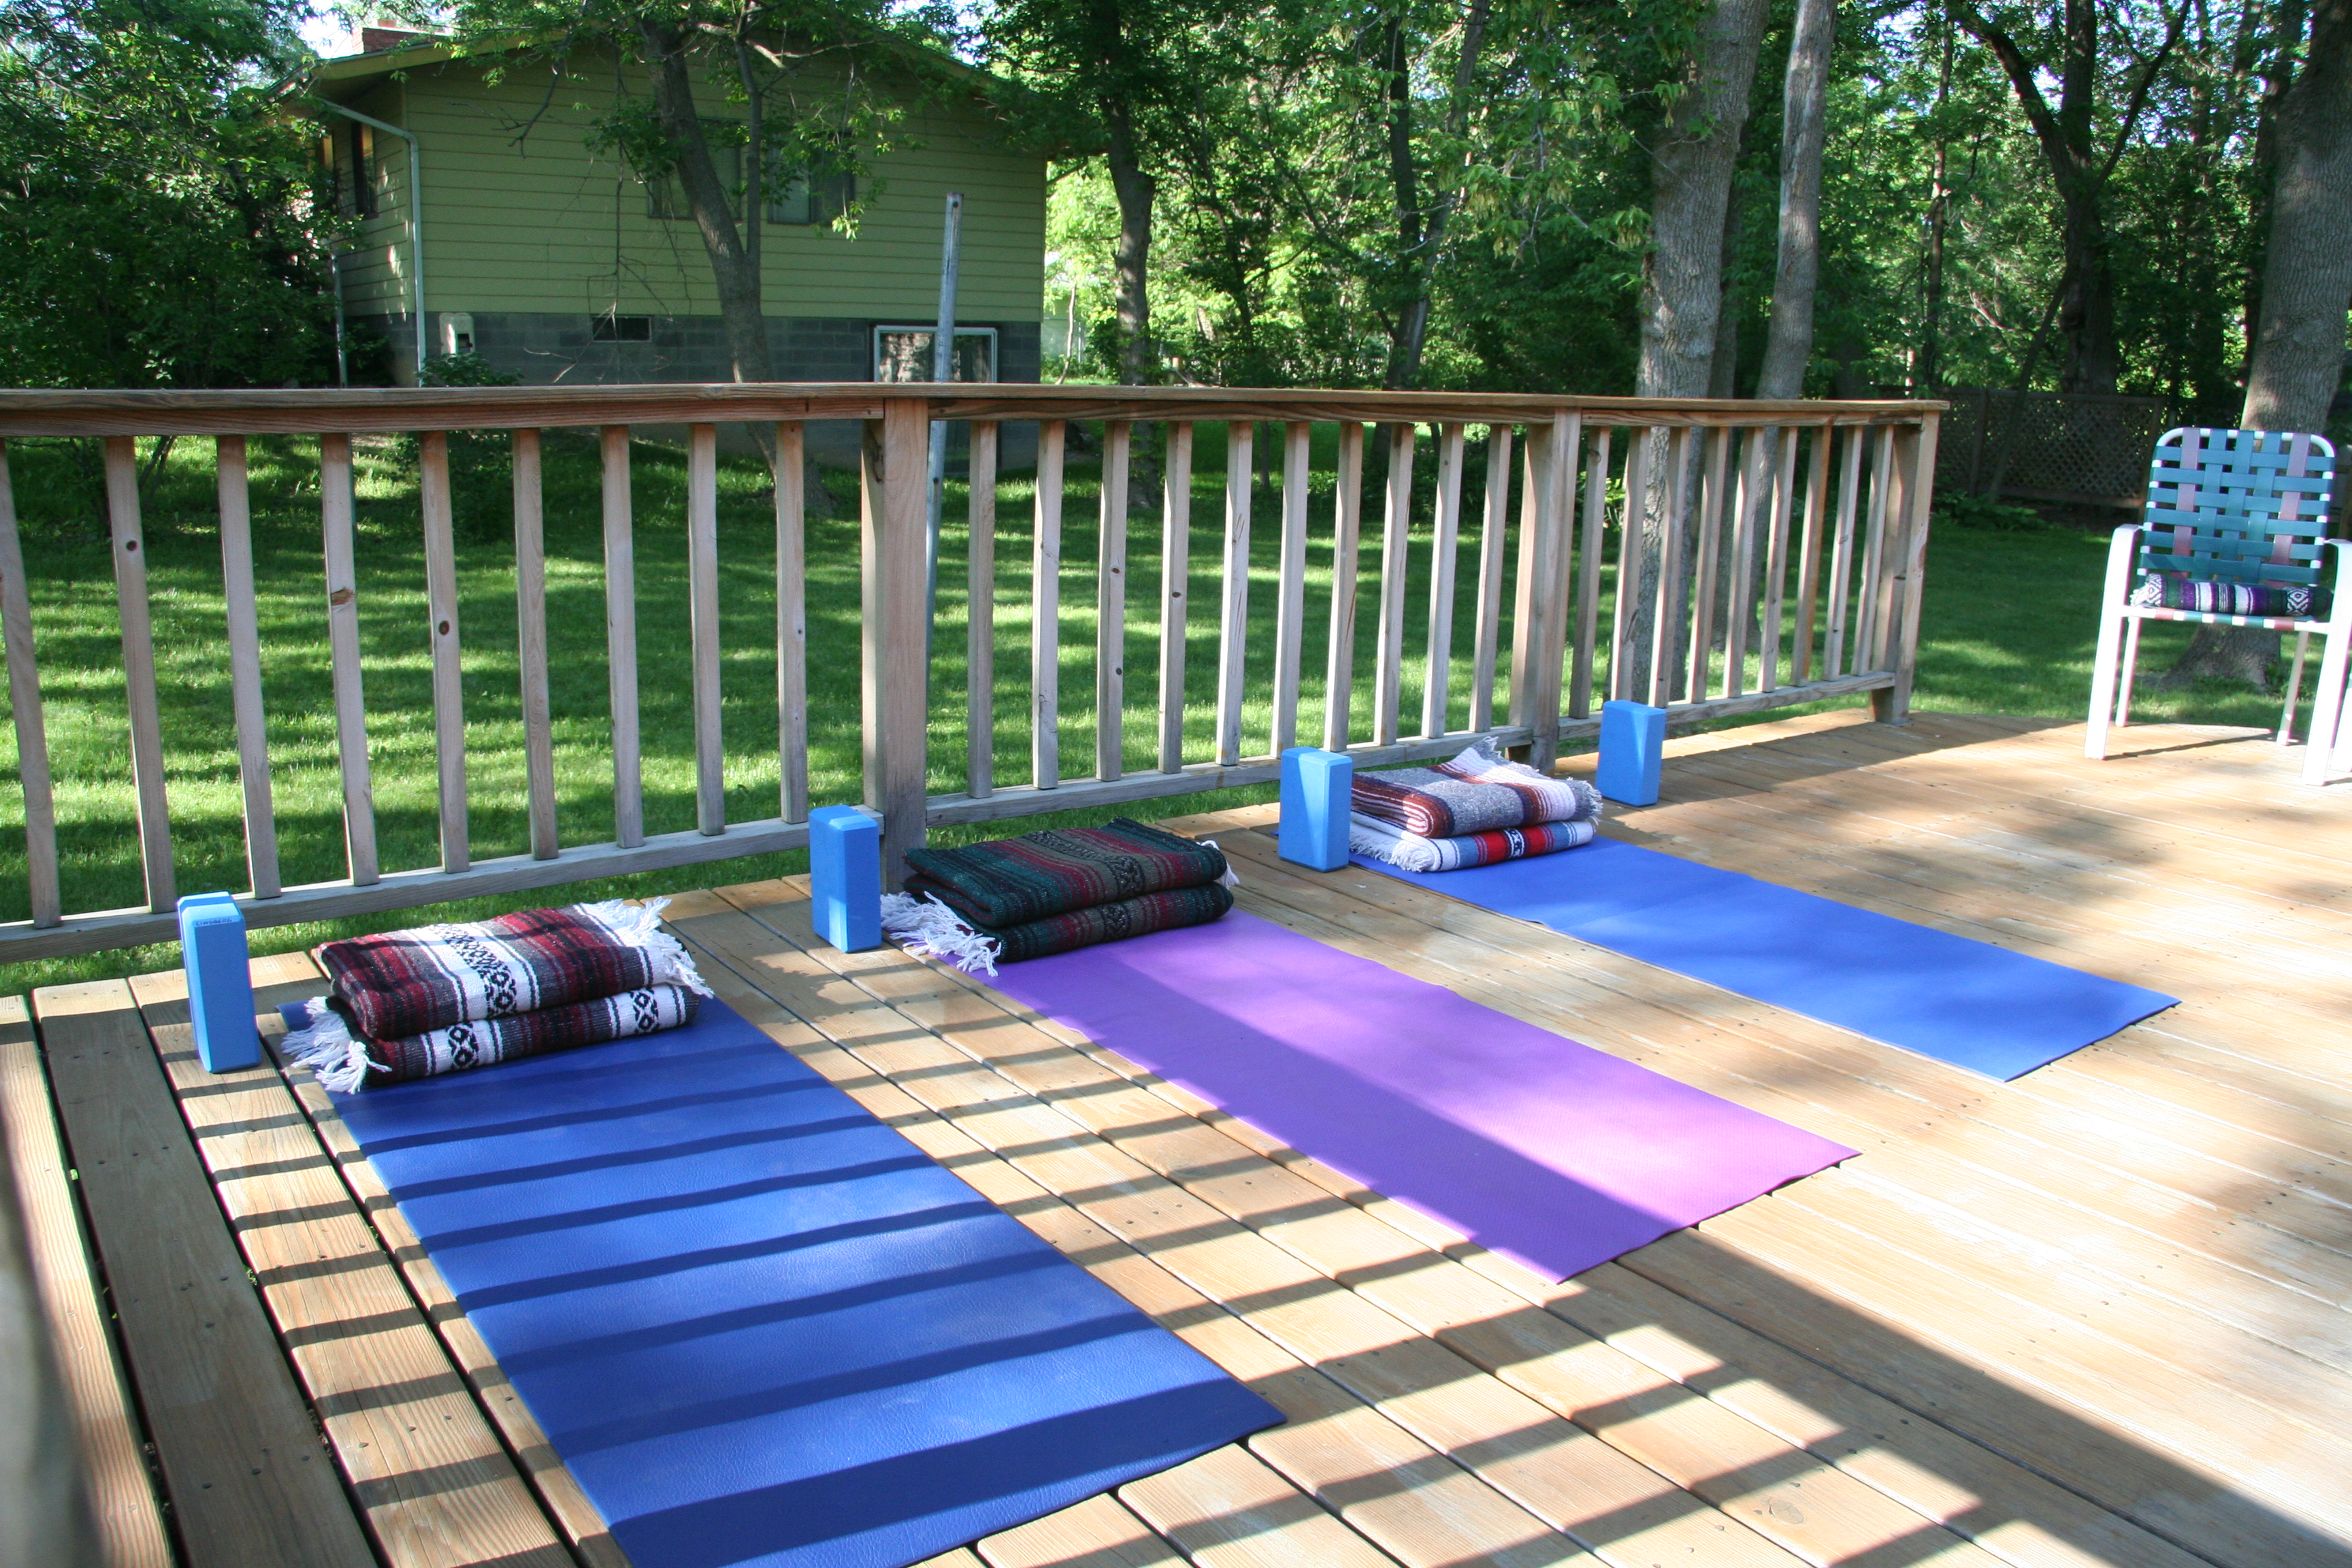 Yoga on the deck